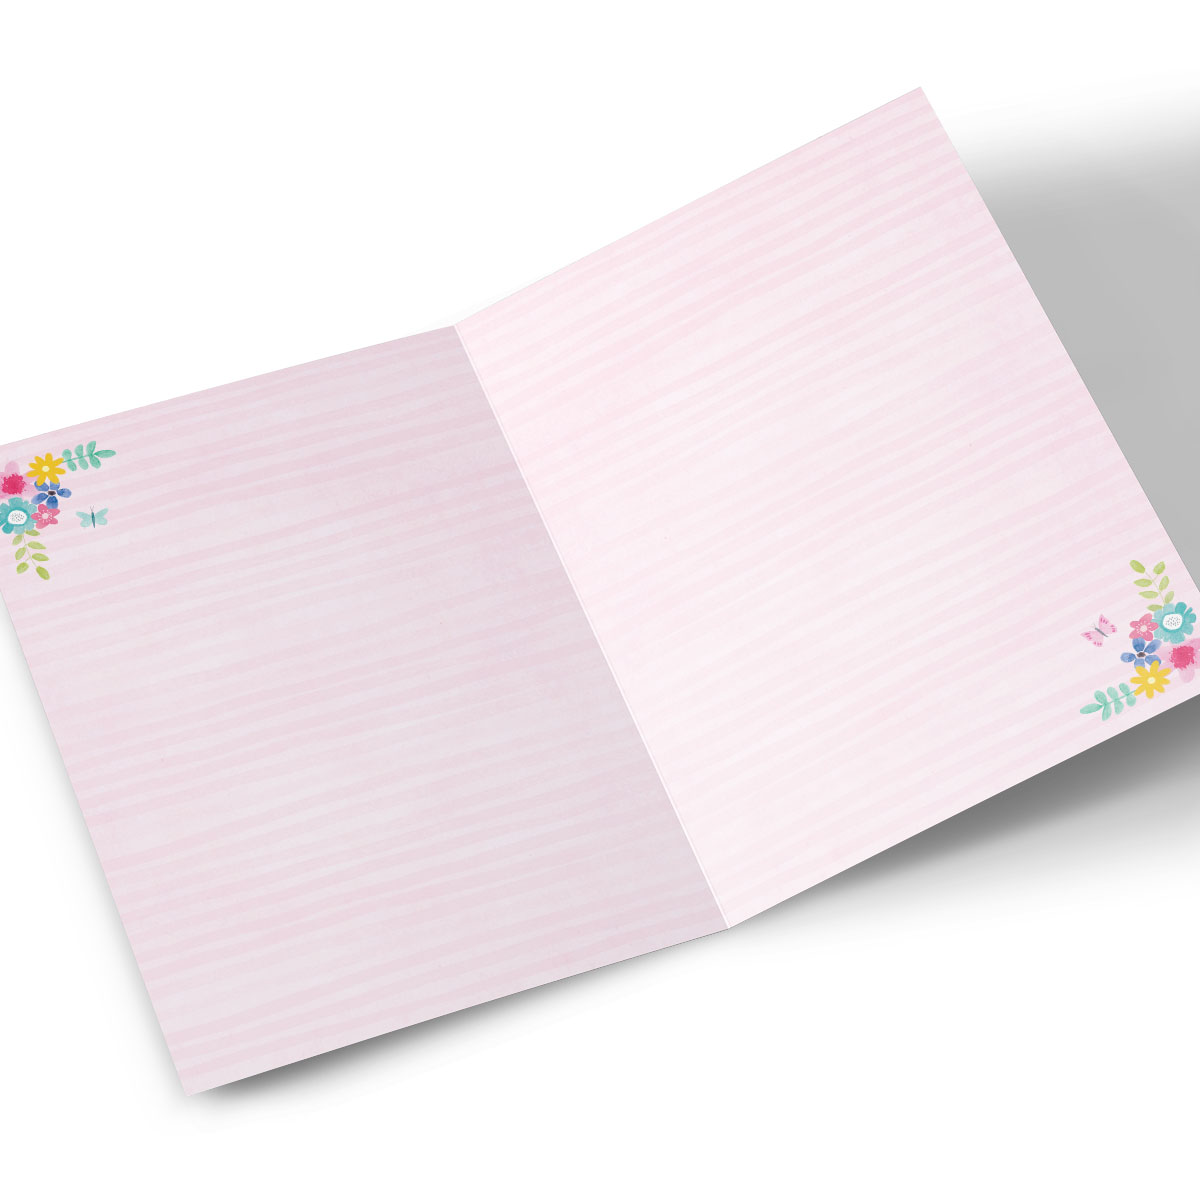 Personalised Birthday Card - Flowers & Stripes, Editable Age